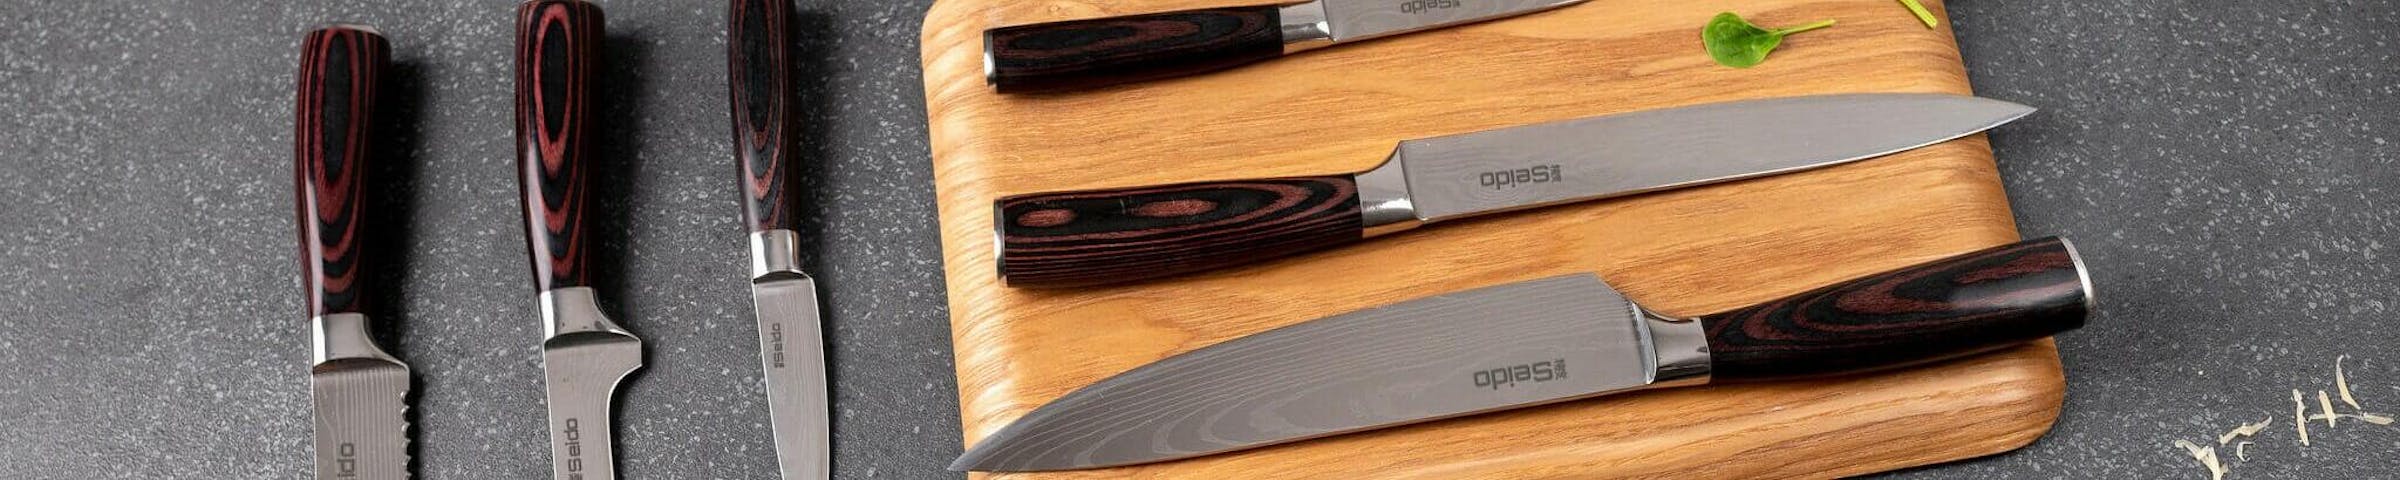 Kemono Cleaver Knife